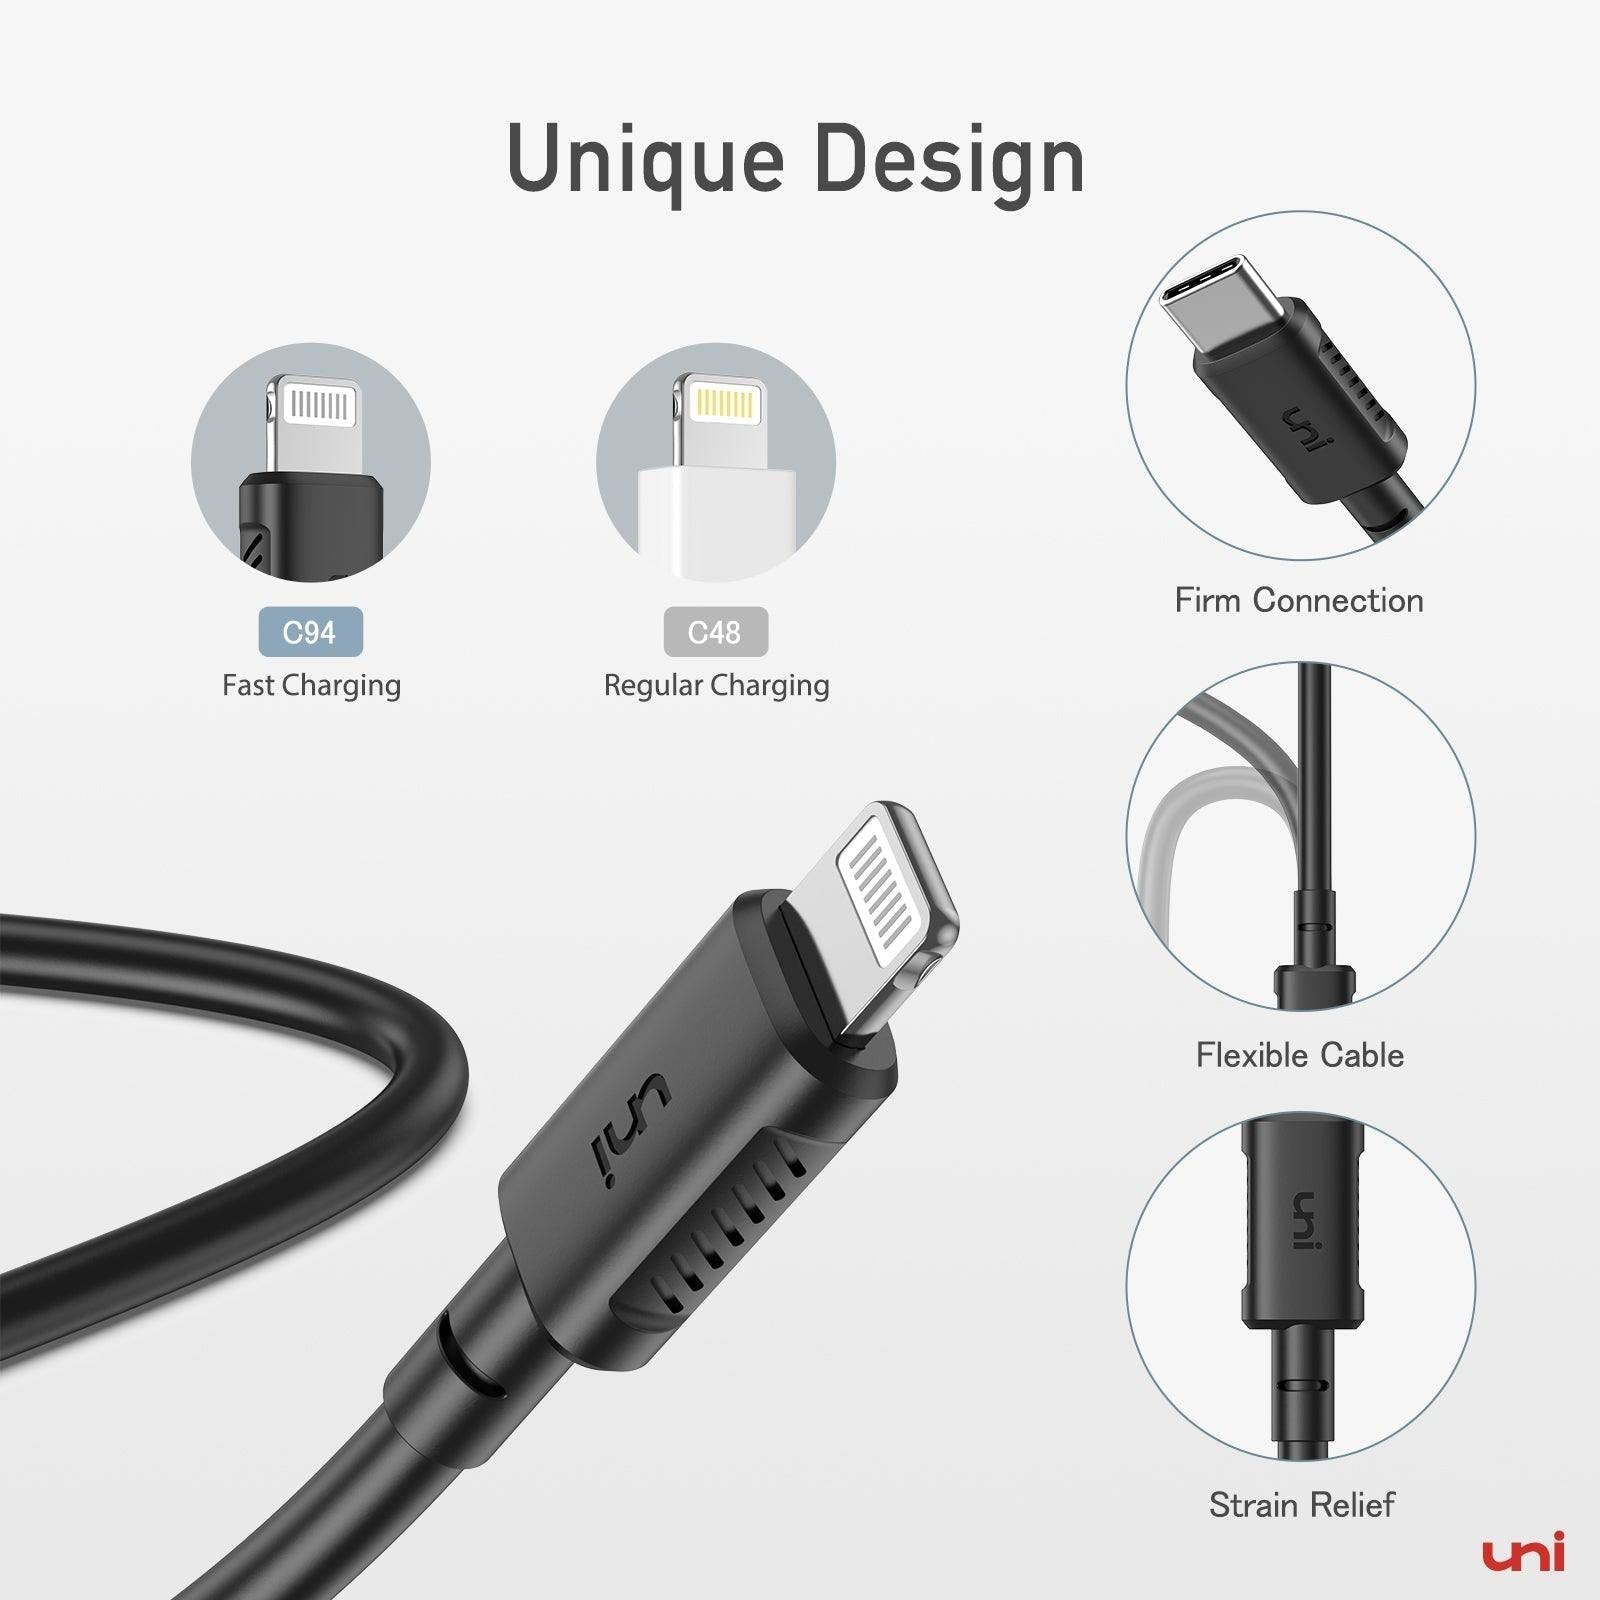 UC-020-IP, USB corto - Cable Lightning para iPhone